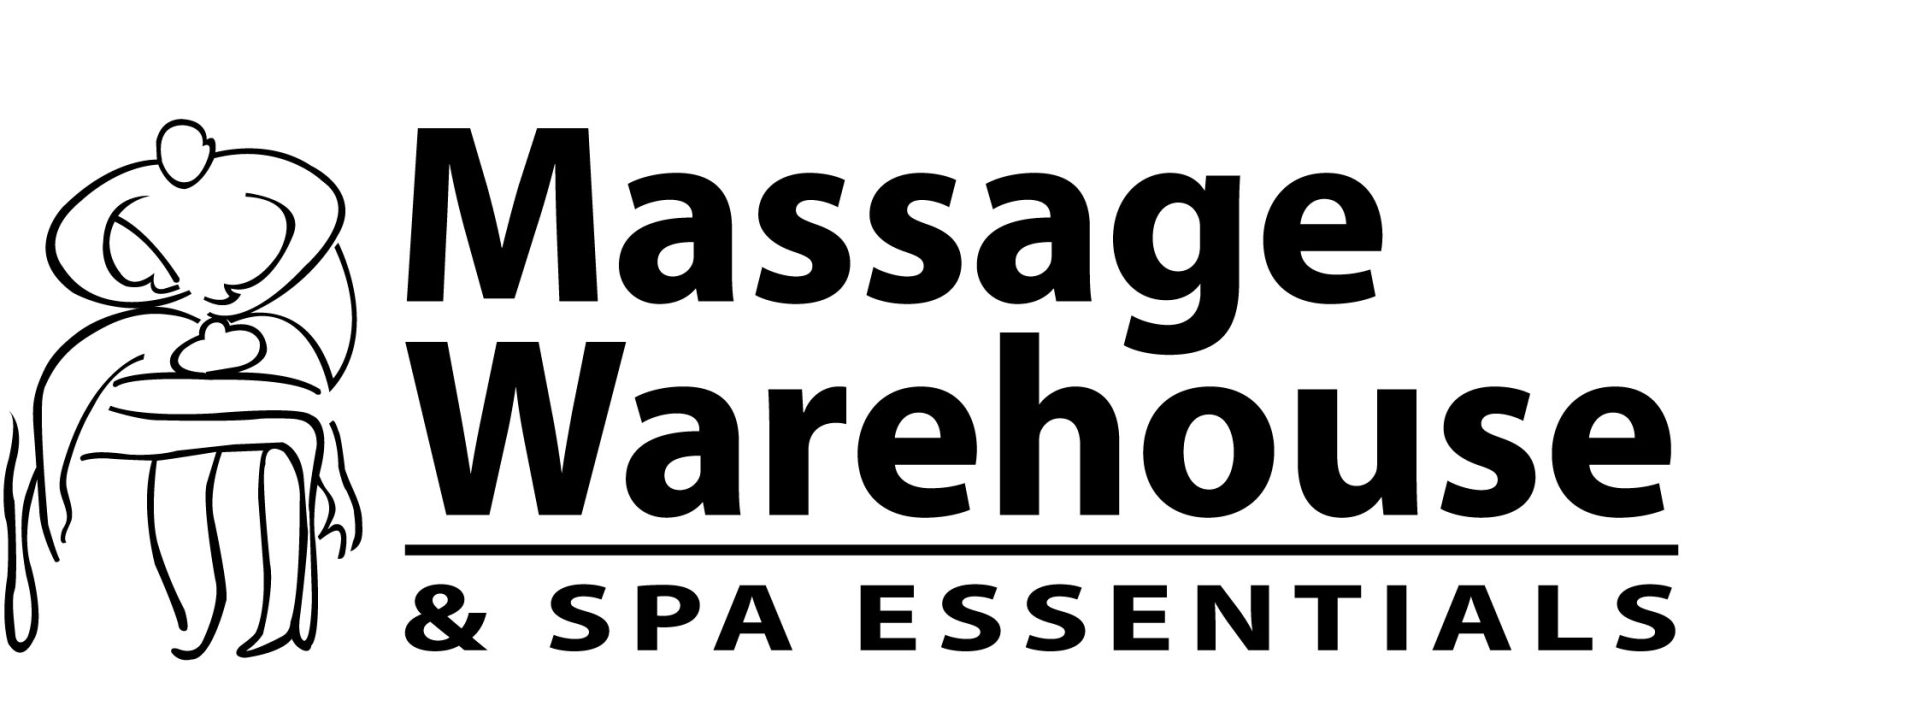 Massage Warehouse Sanctuary Donates More than $10,000 to Massage Therapy Foundation, MASSAGE Magazine